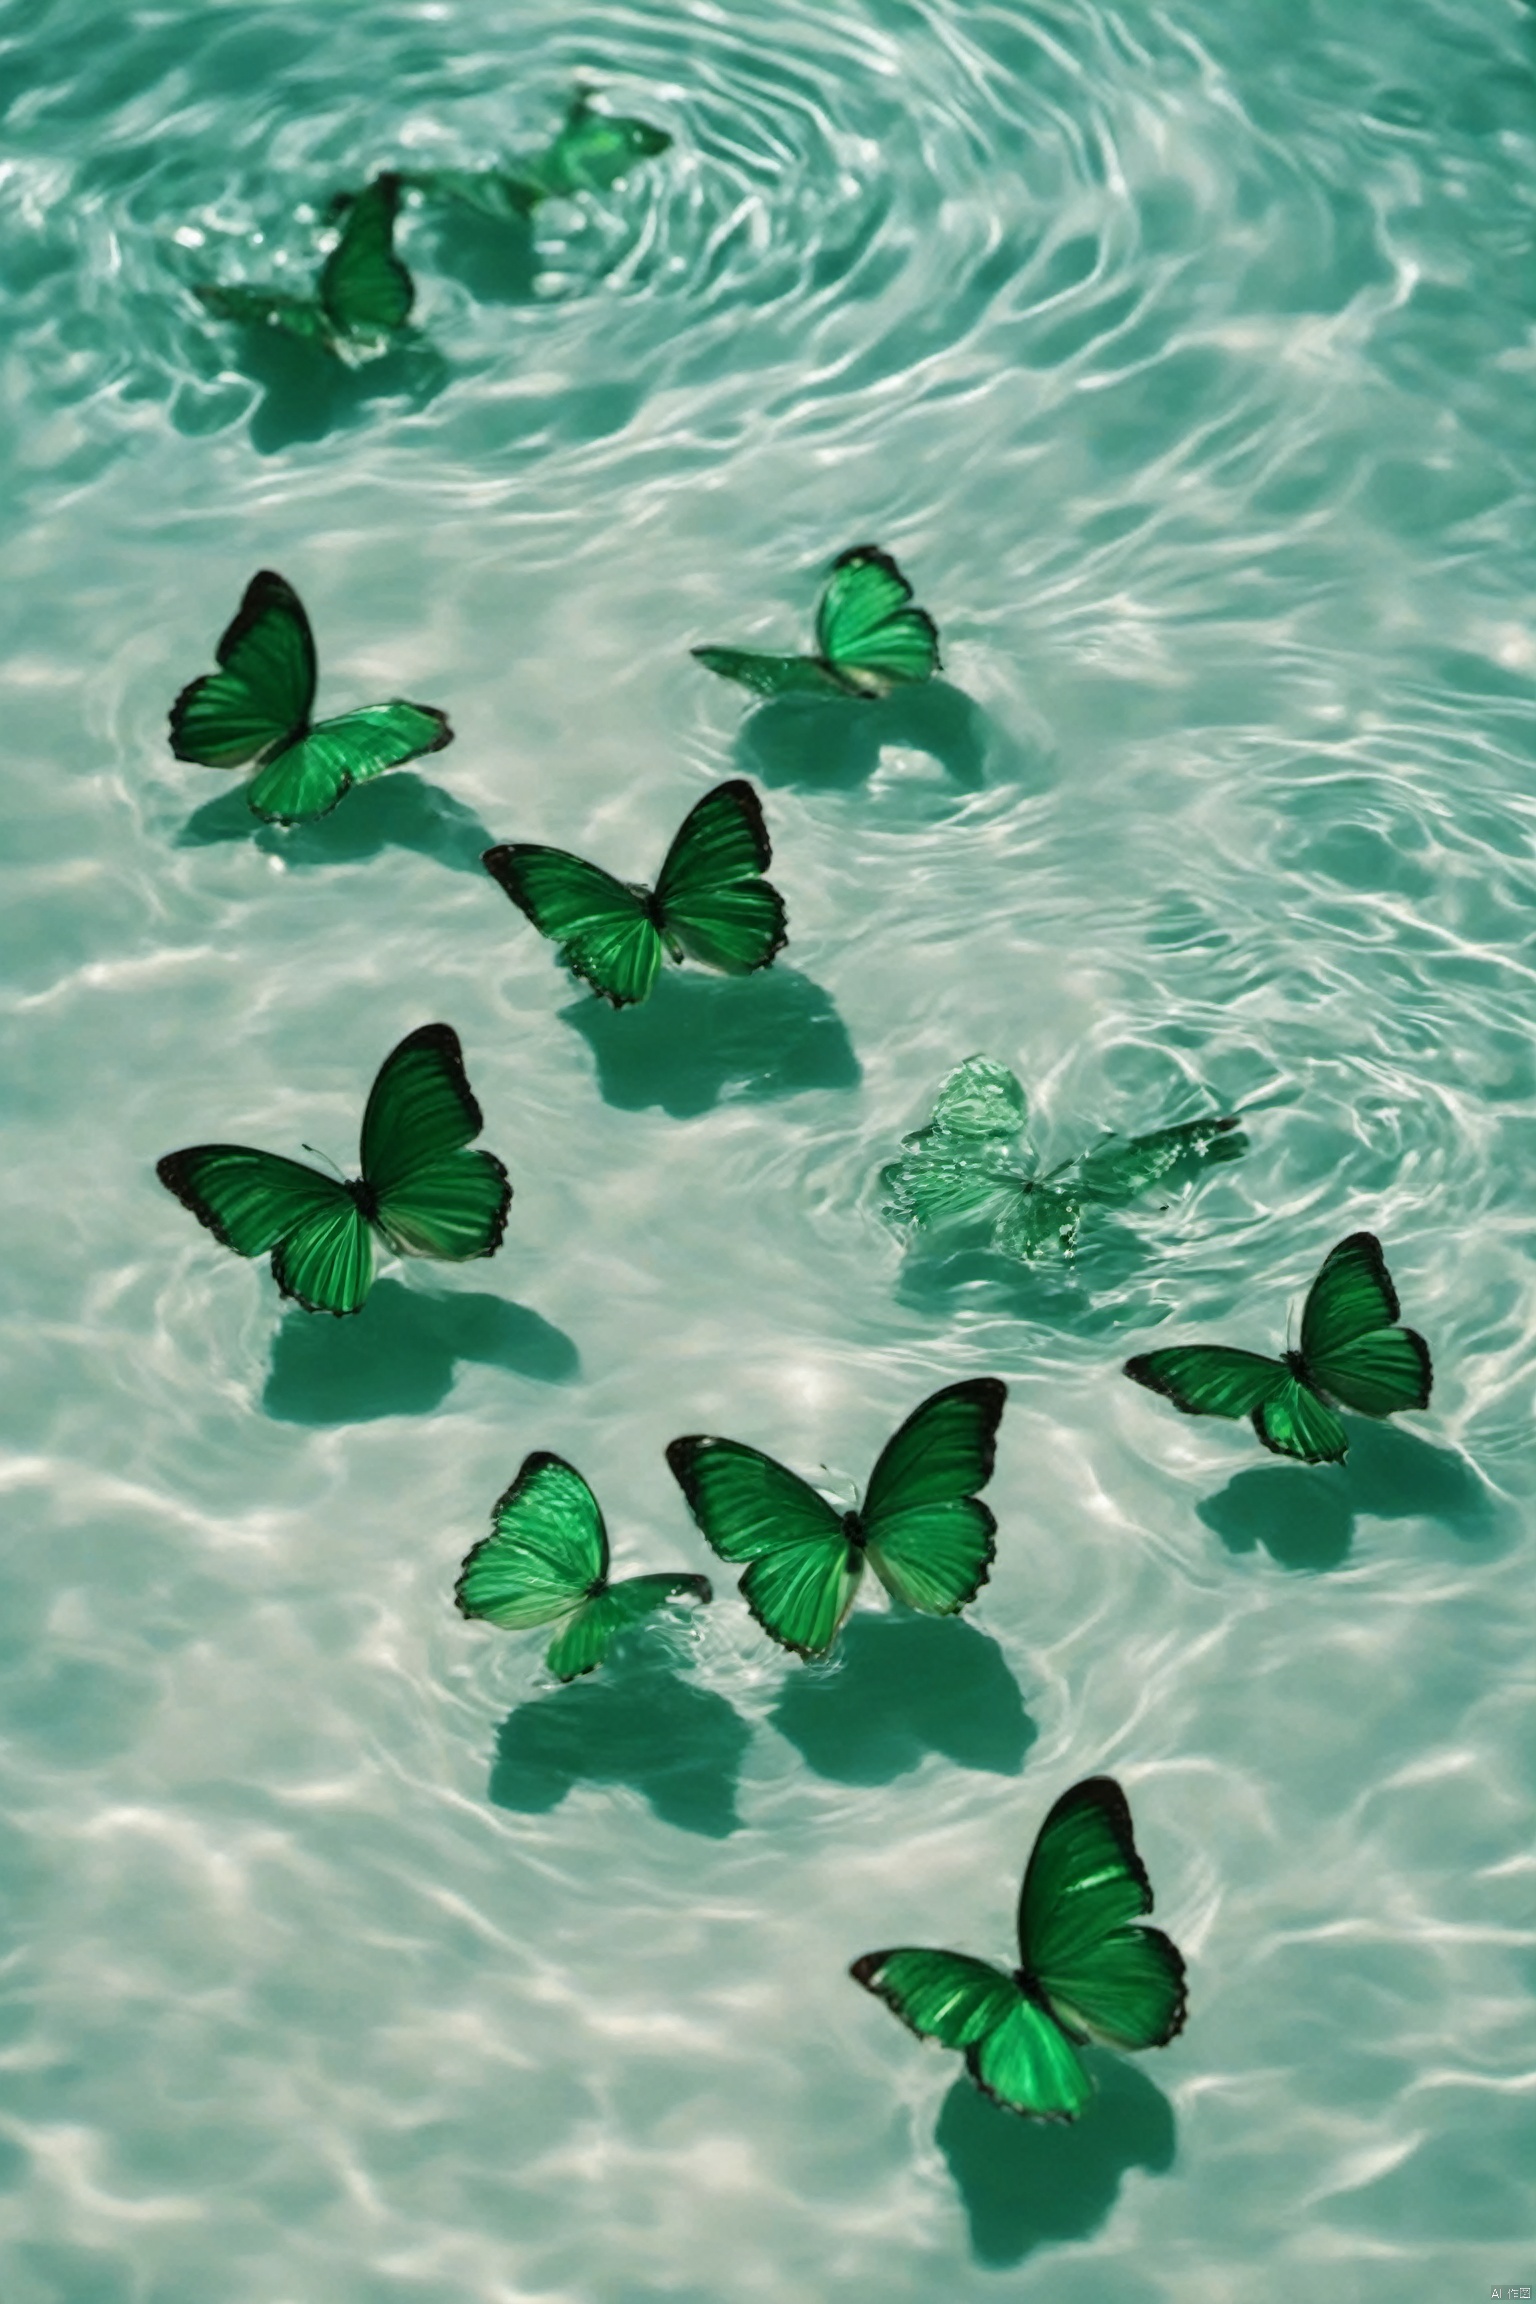  Water_butterfly,green butterfly,water,water ripples